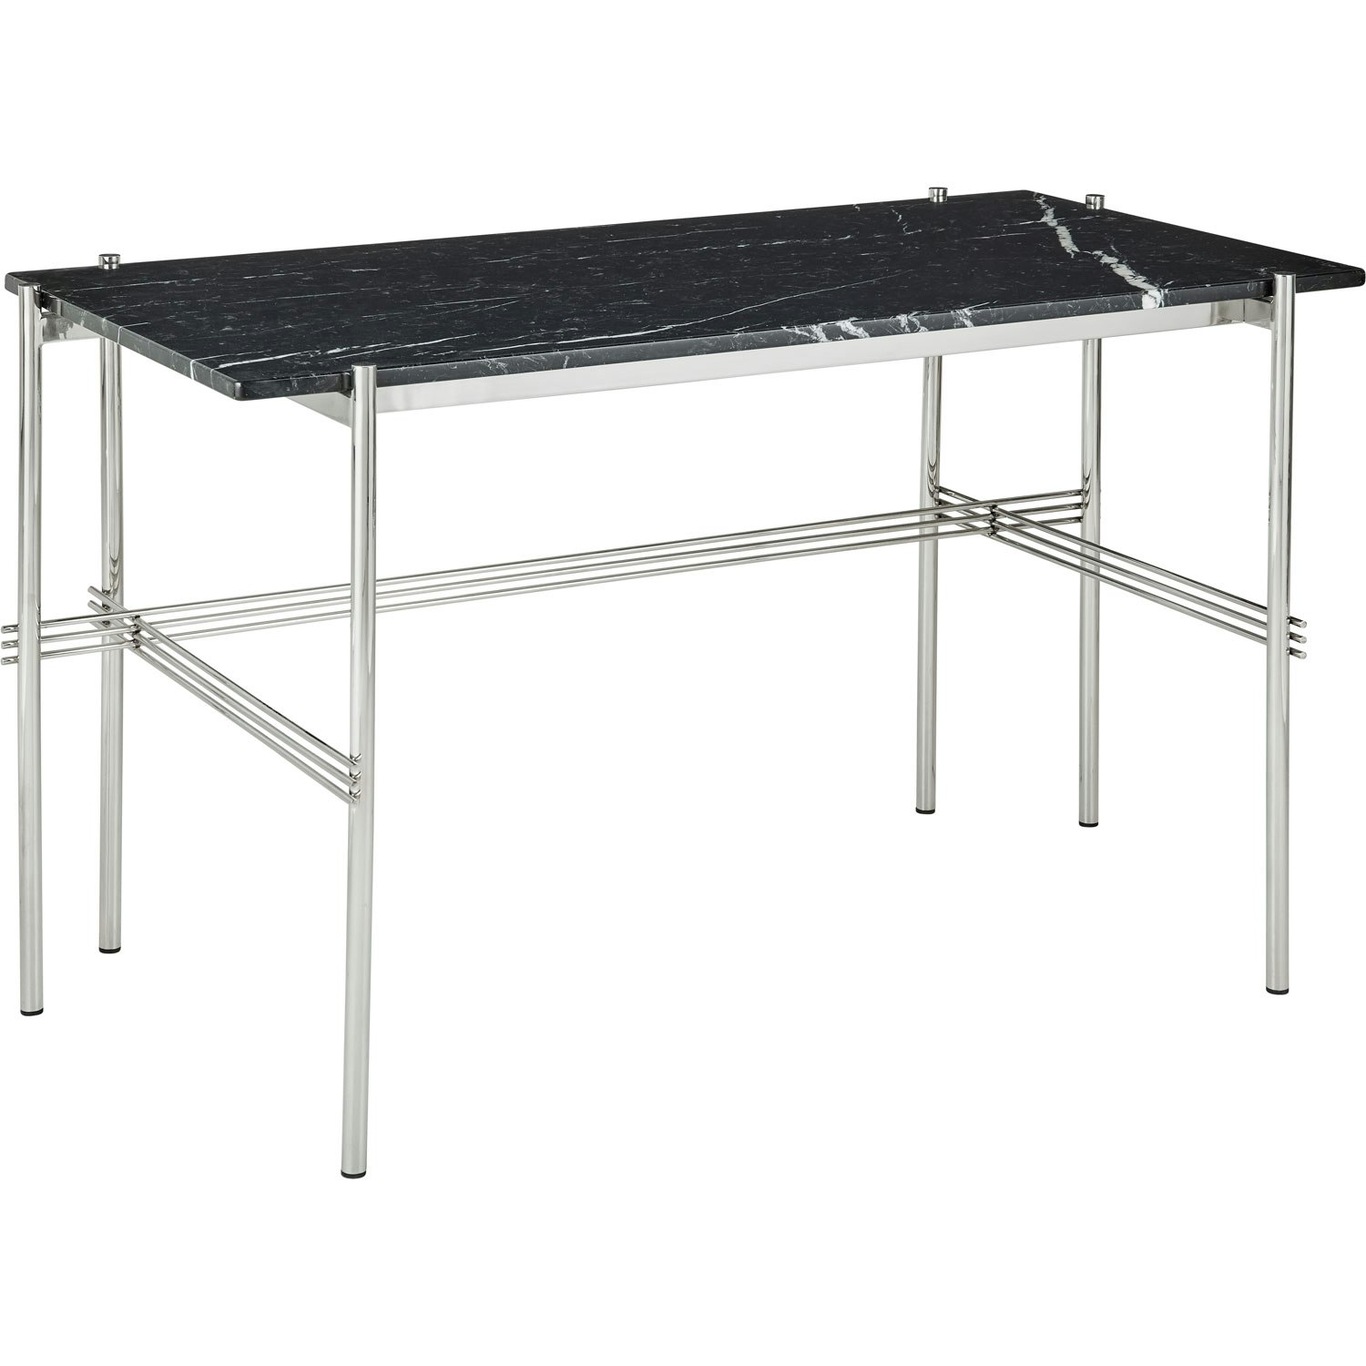 TS Desk 60x120 cm, Polished Steel / Black Marquina marble